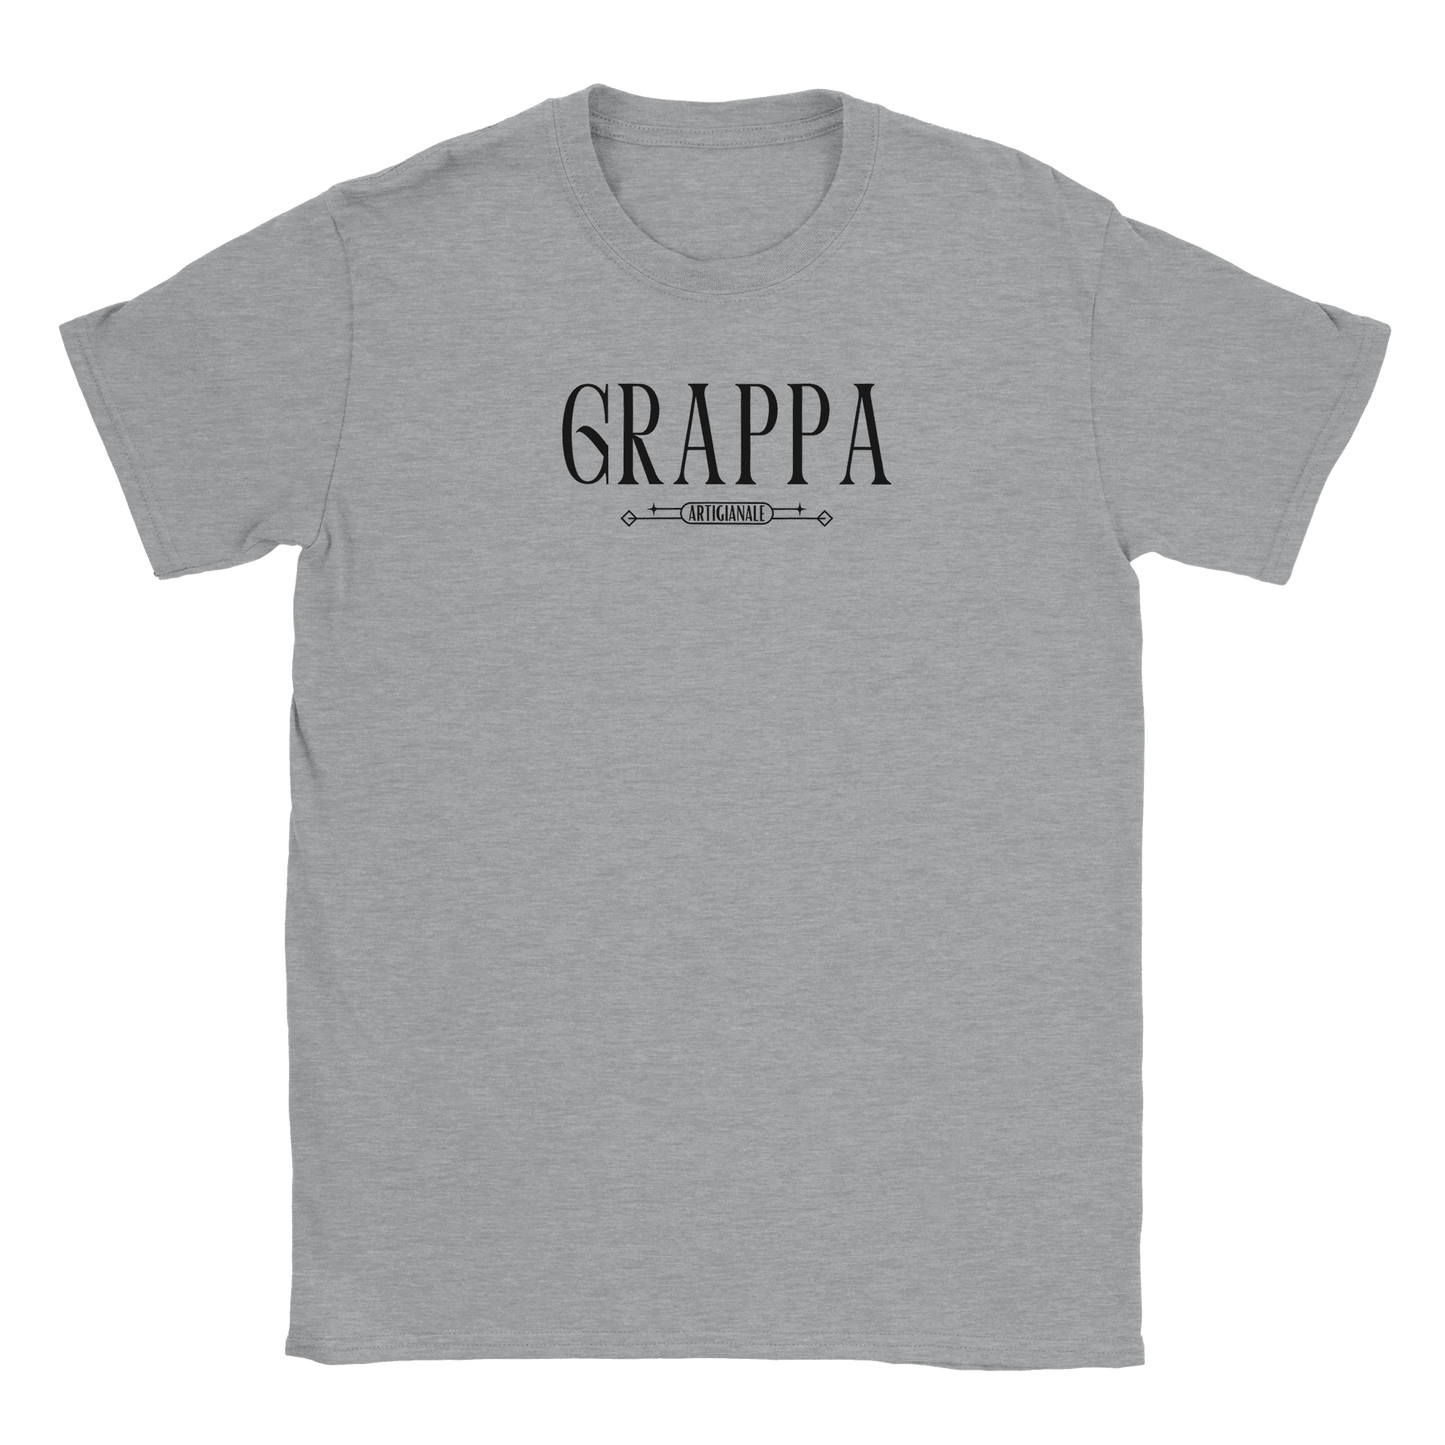 Grappa - T-shirt Grå